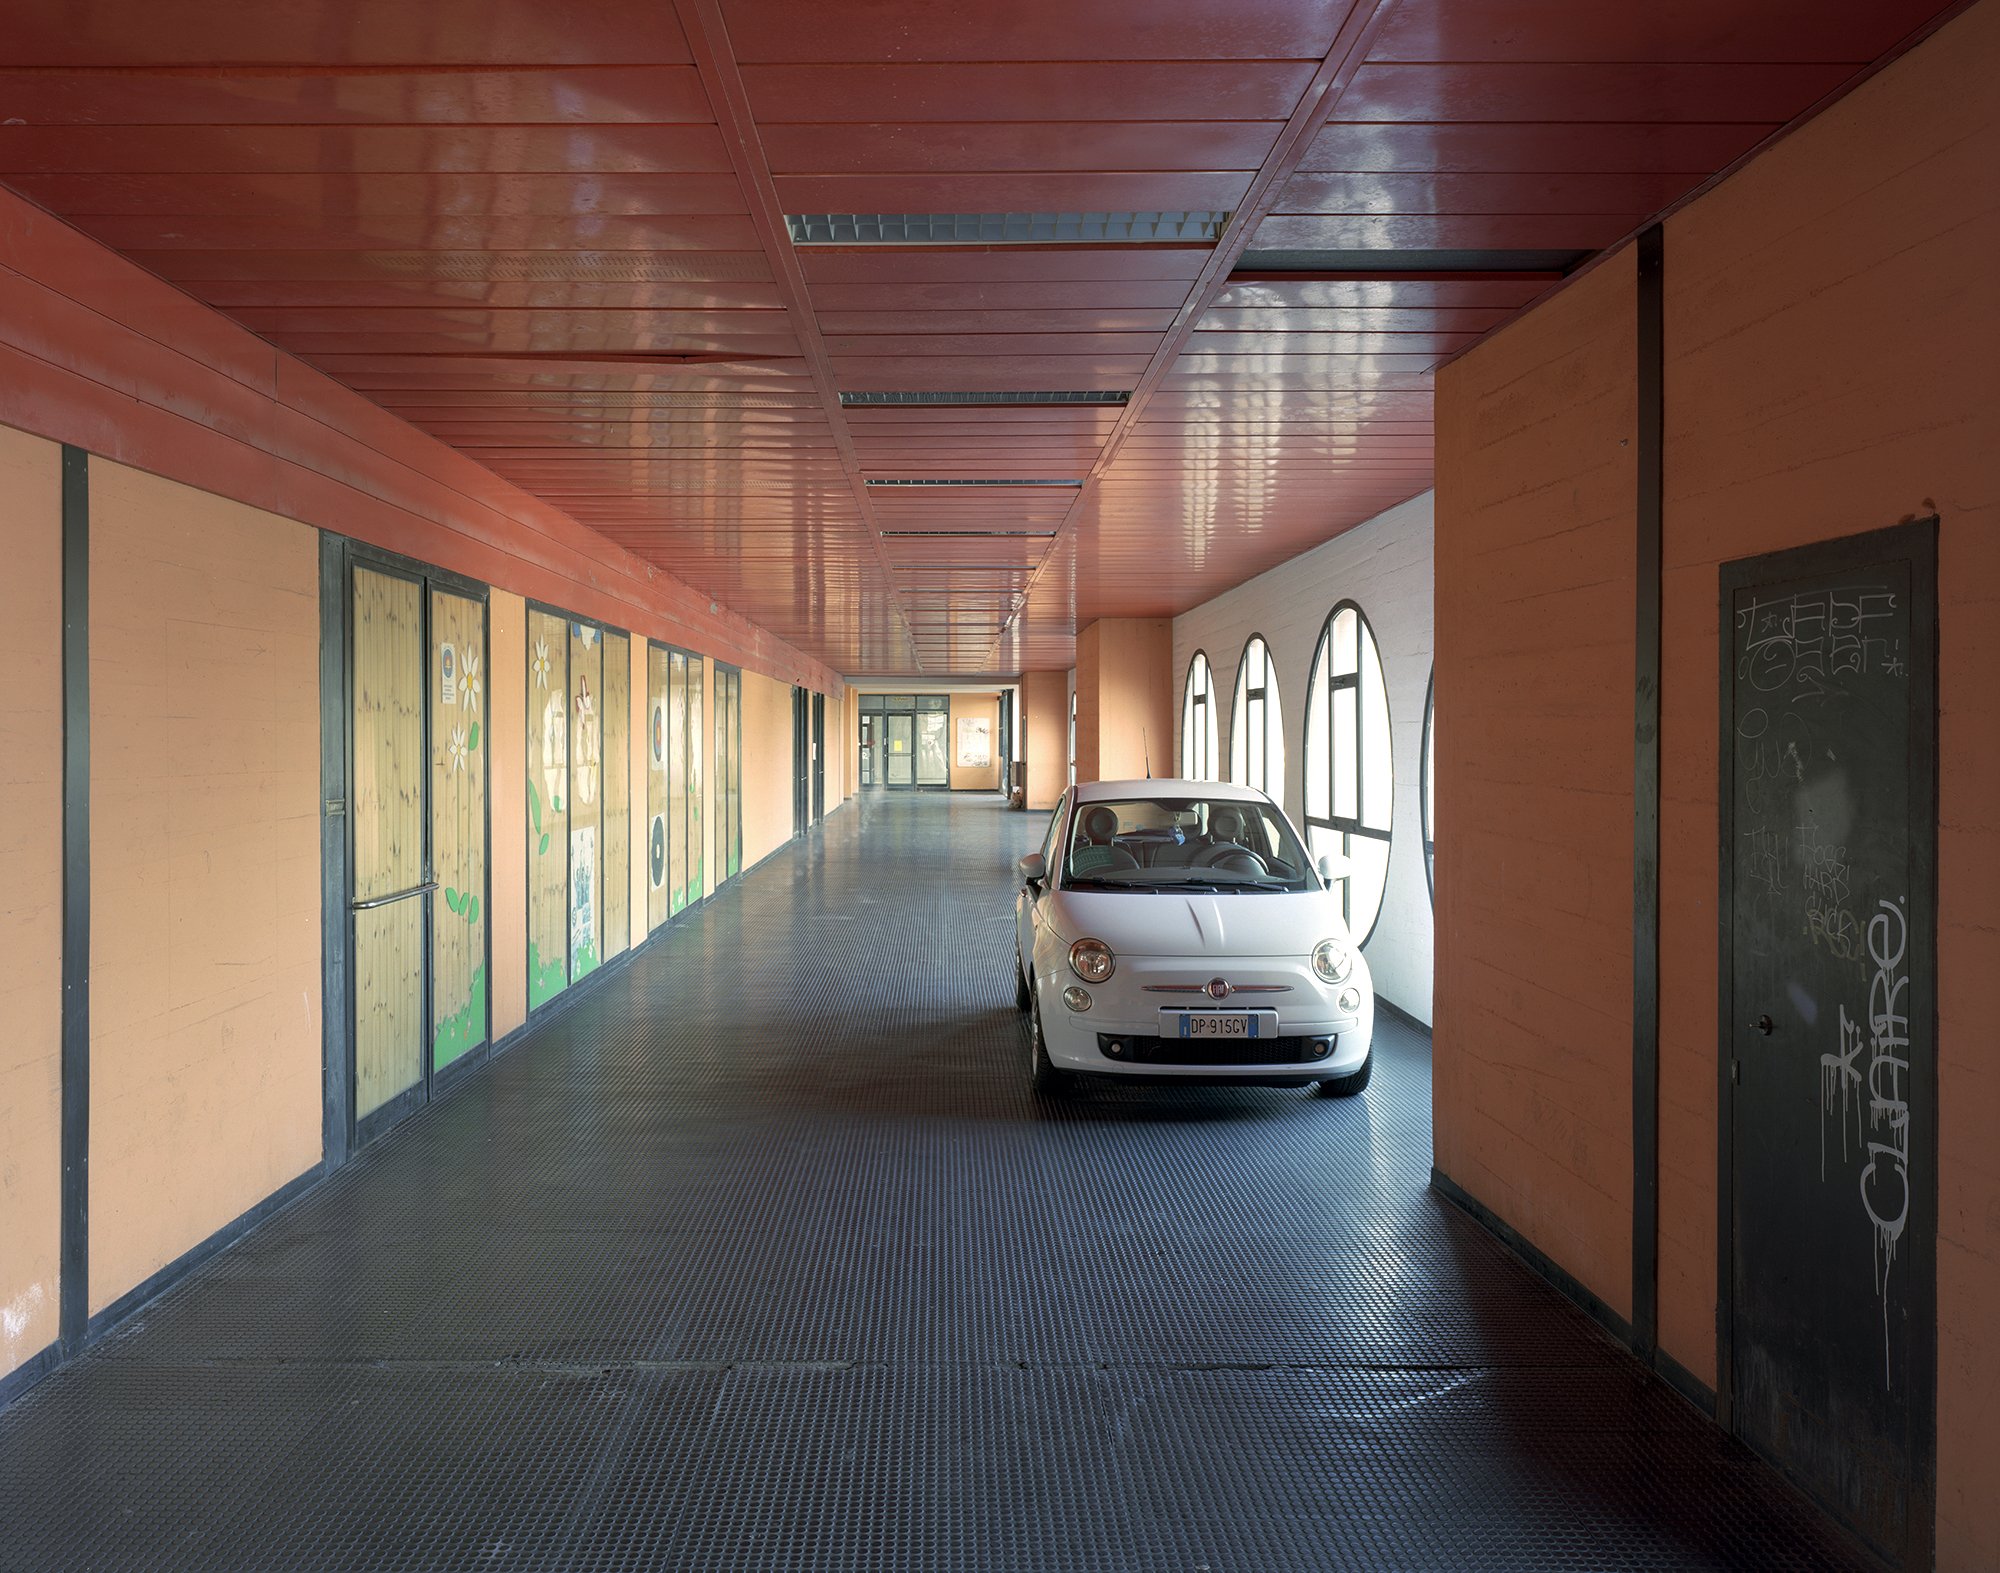  Fiat in Hallway, Melara. Trieste. 2016. 